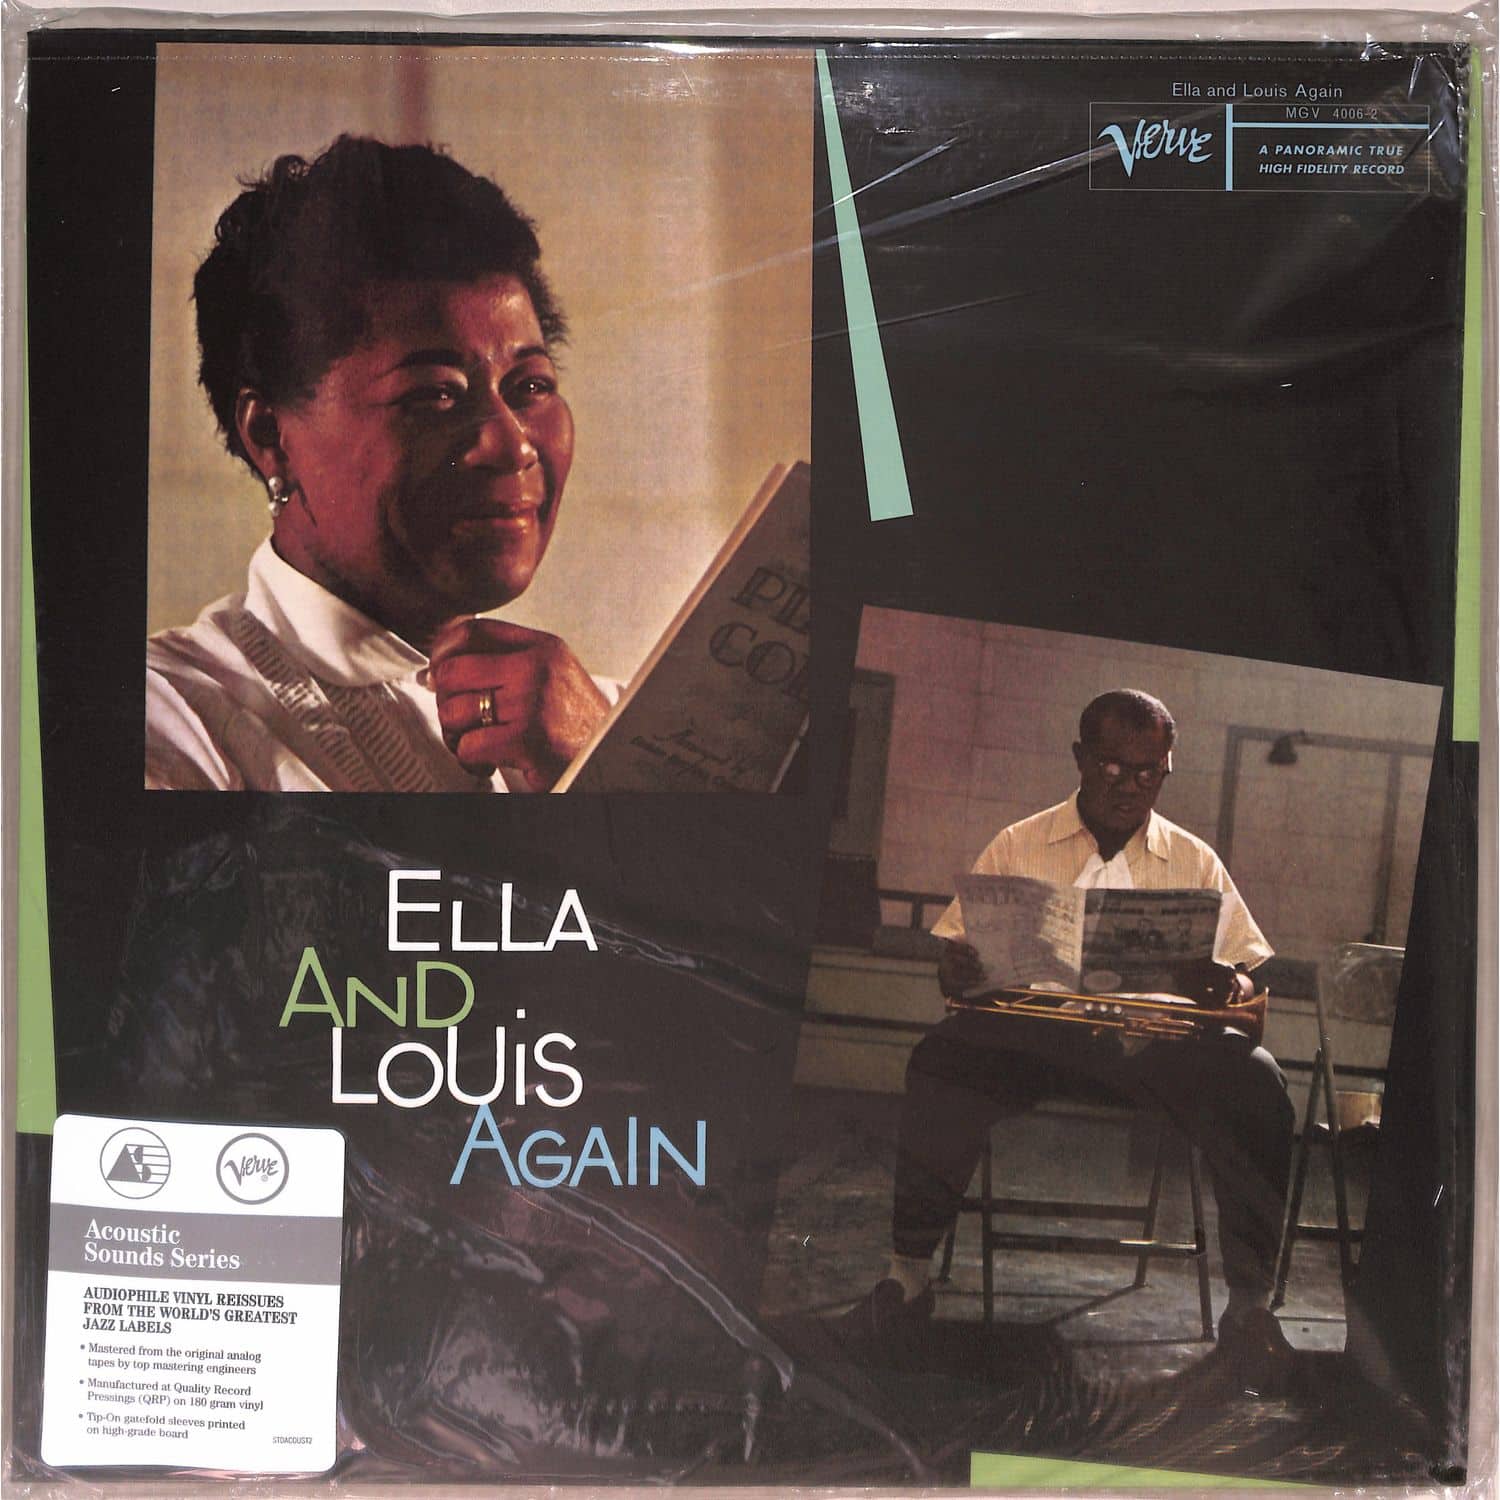 Ella Fitzgerald & Louis Armstrong - ELLA & LOUIS AGAIN 